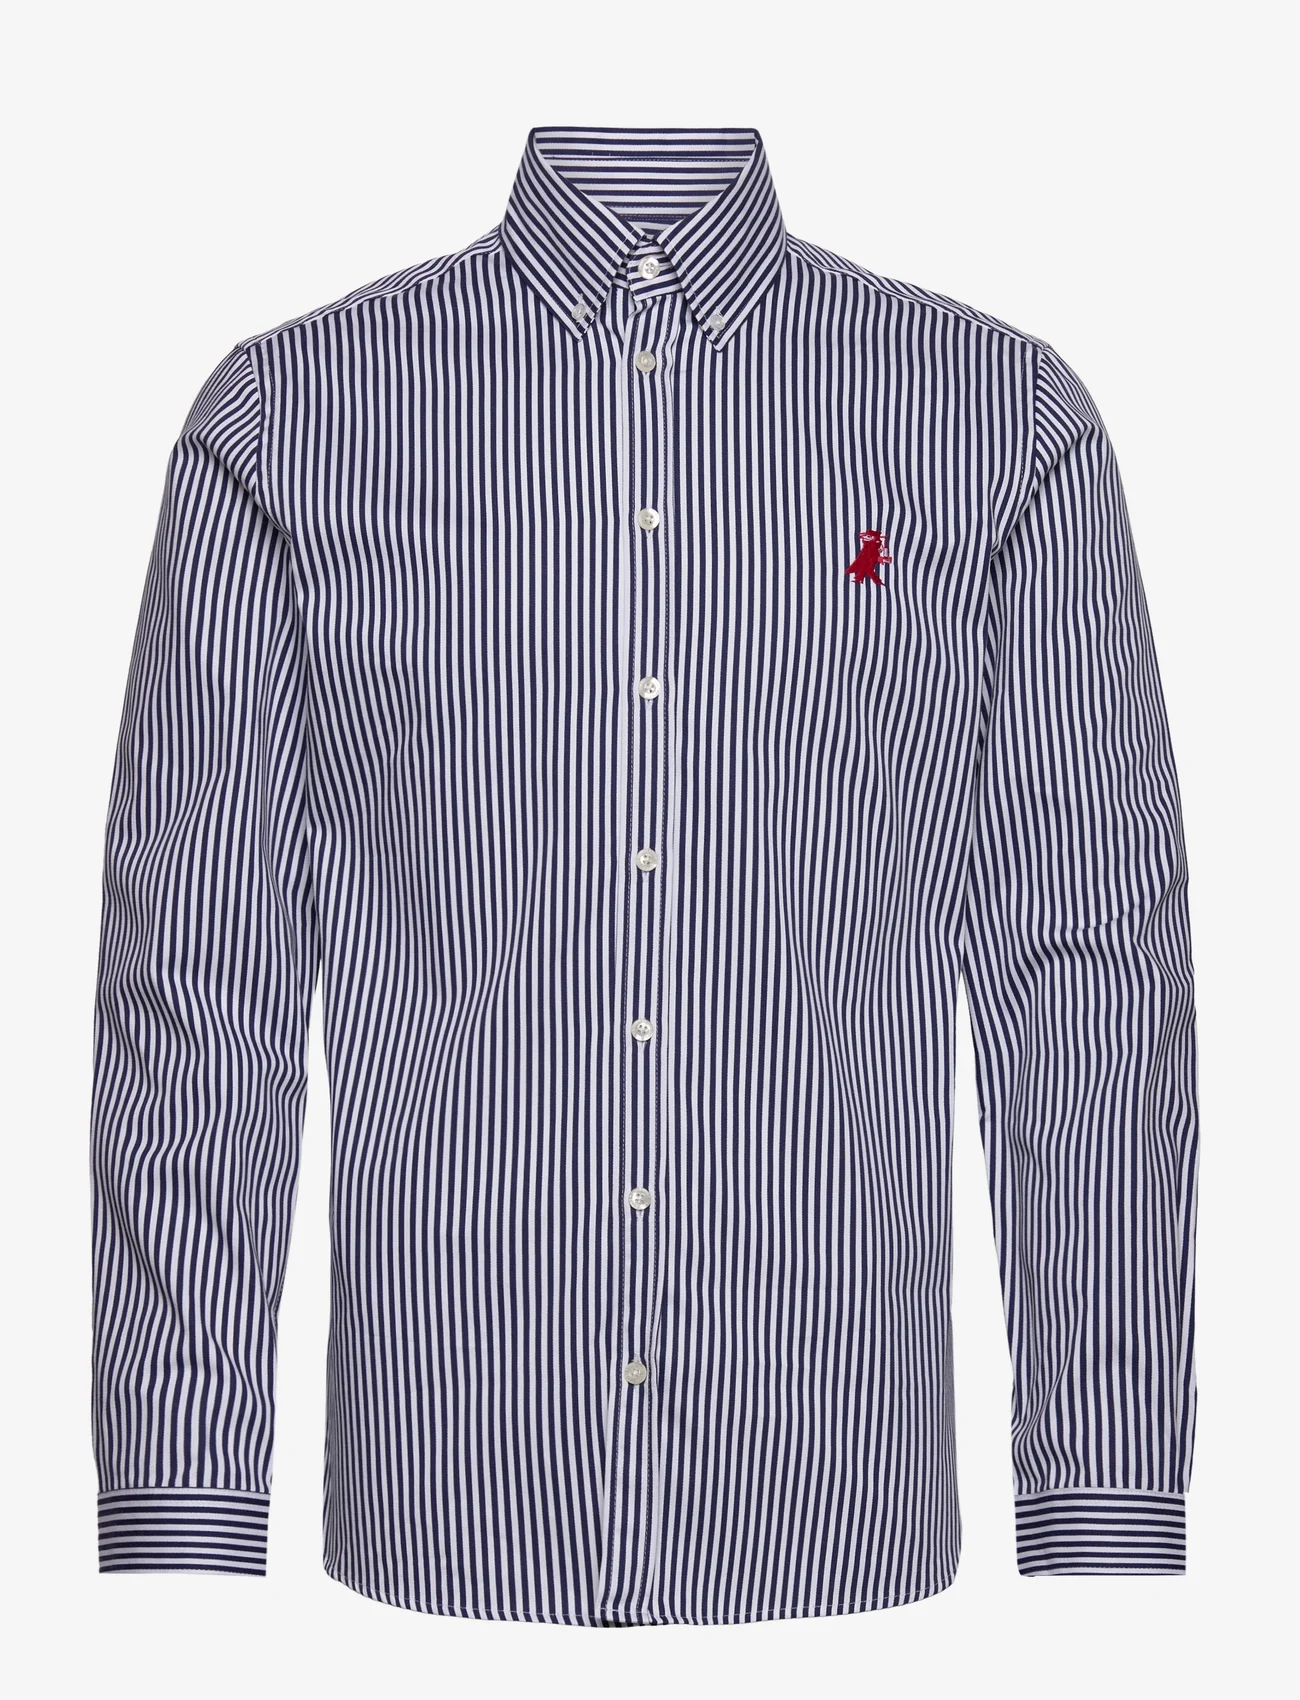 Libertine-Libertine - Voleur Shirt - business skjortor - white & navy stripe - 0